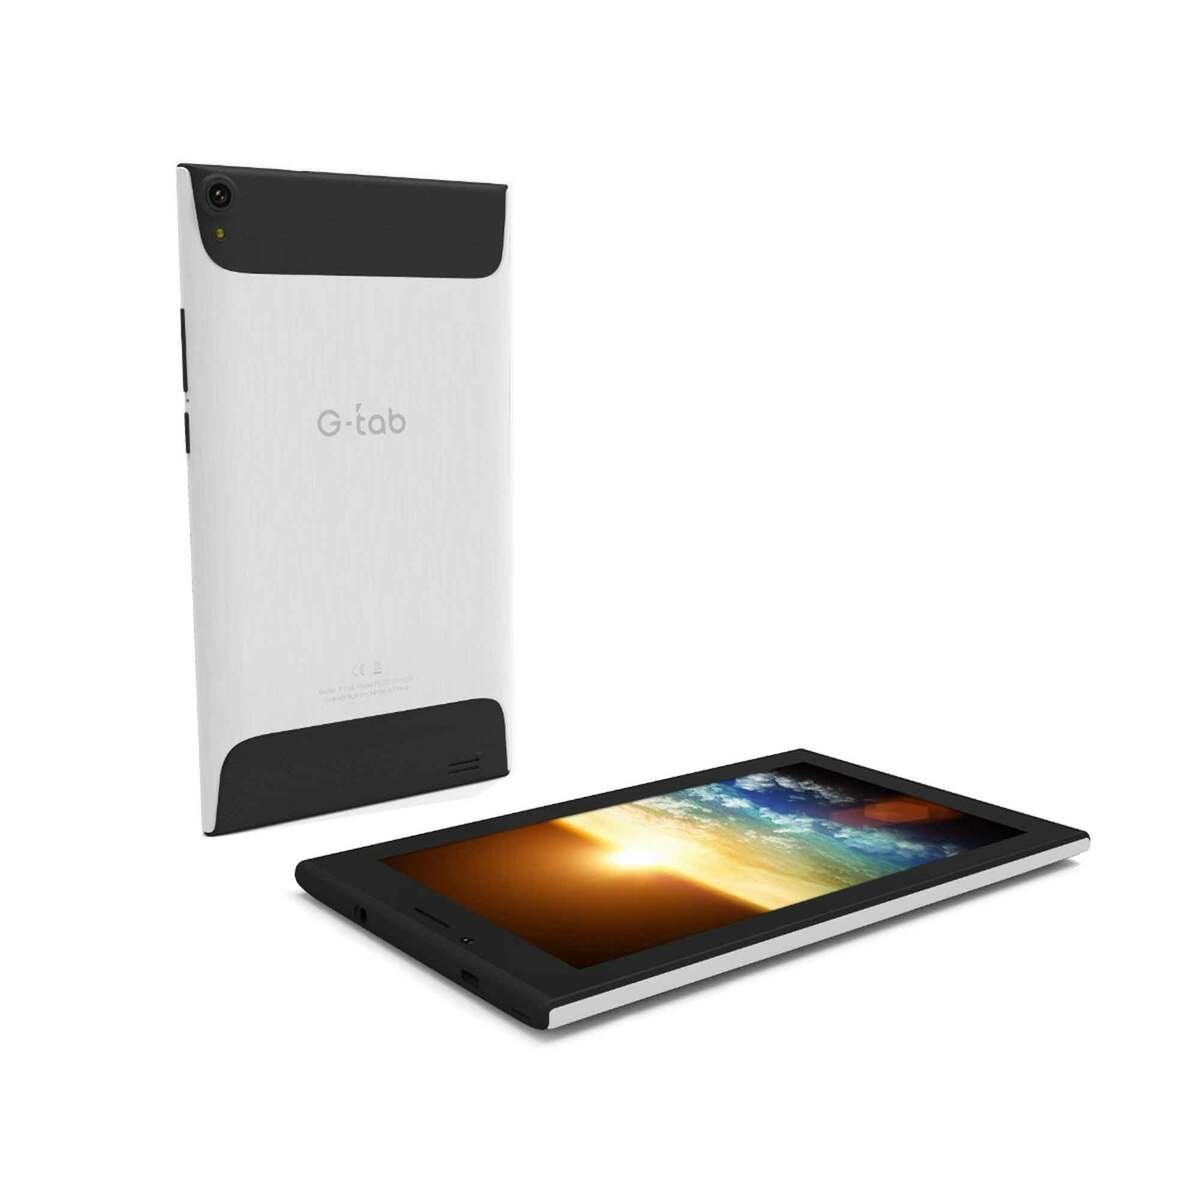 Gtab Tablet P733, 3G, Quad-core Processor, 1GB RAM, 16GB Memory, 7.0 inches Display, Android, White